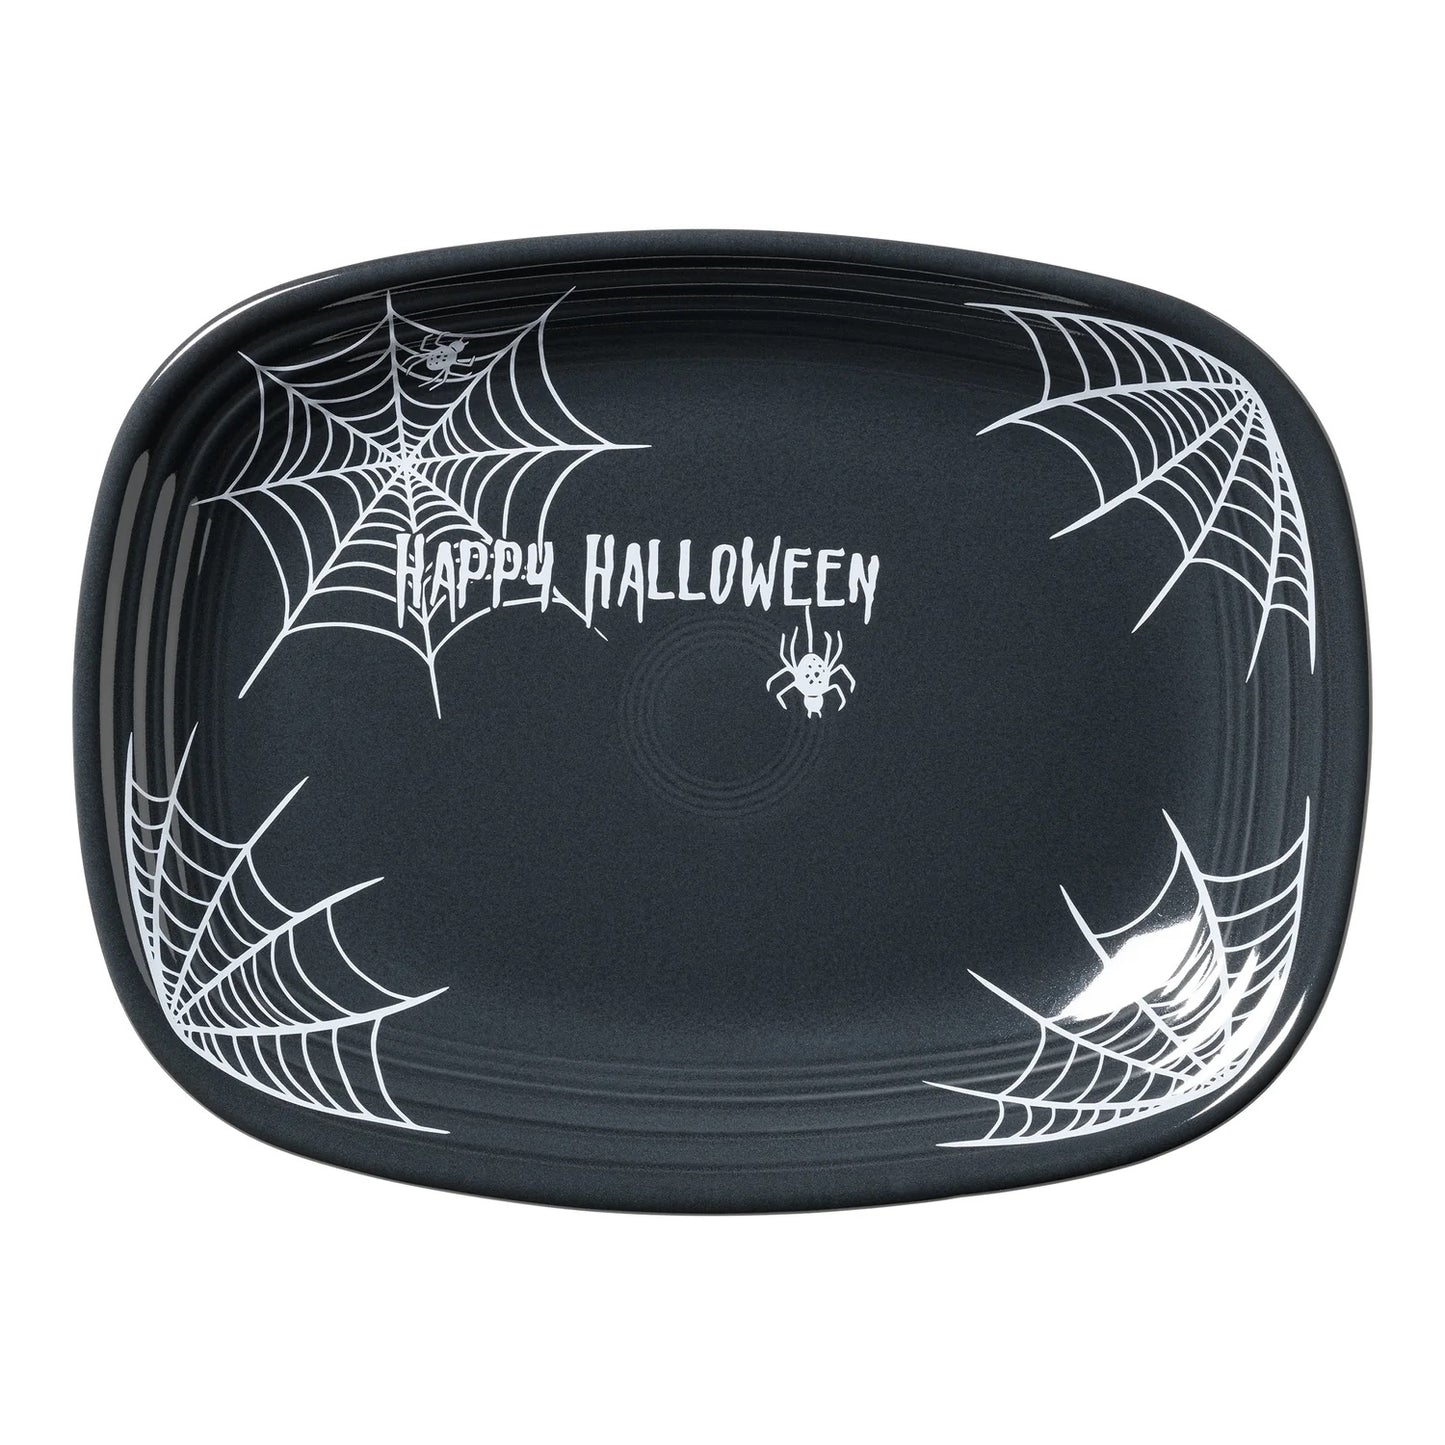 Fiesta® Rectangular Platter - Halloween Spider Web